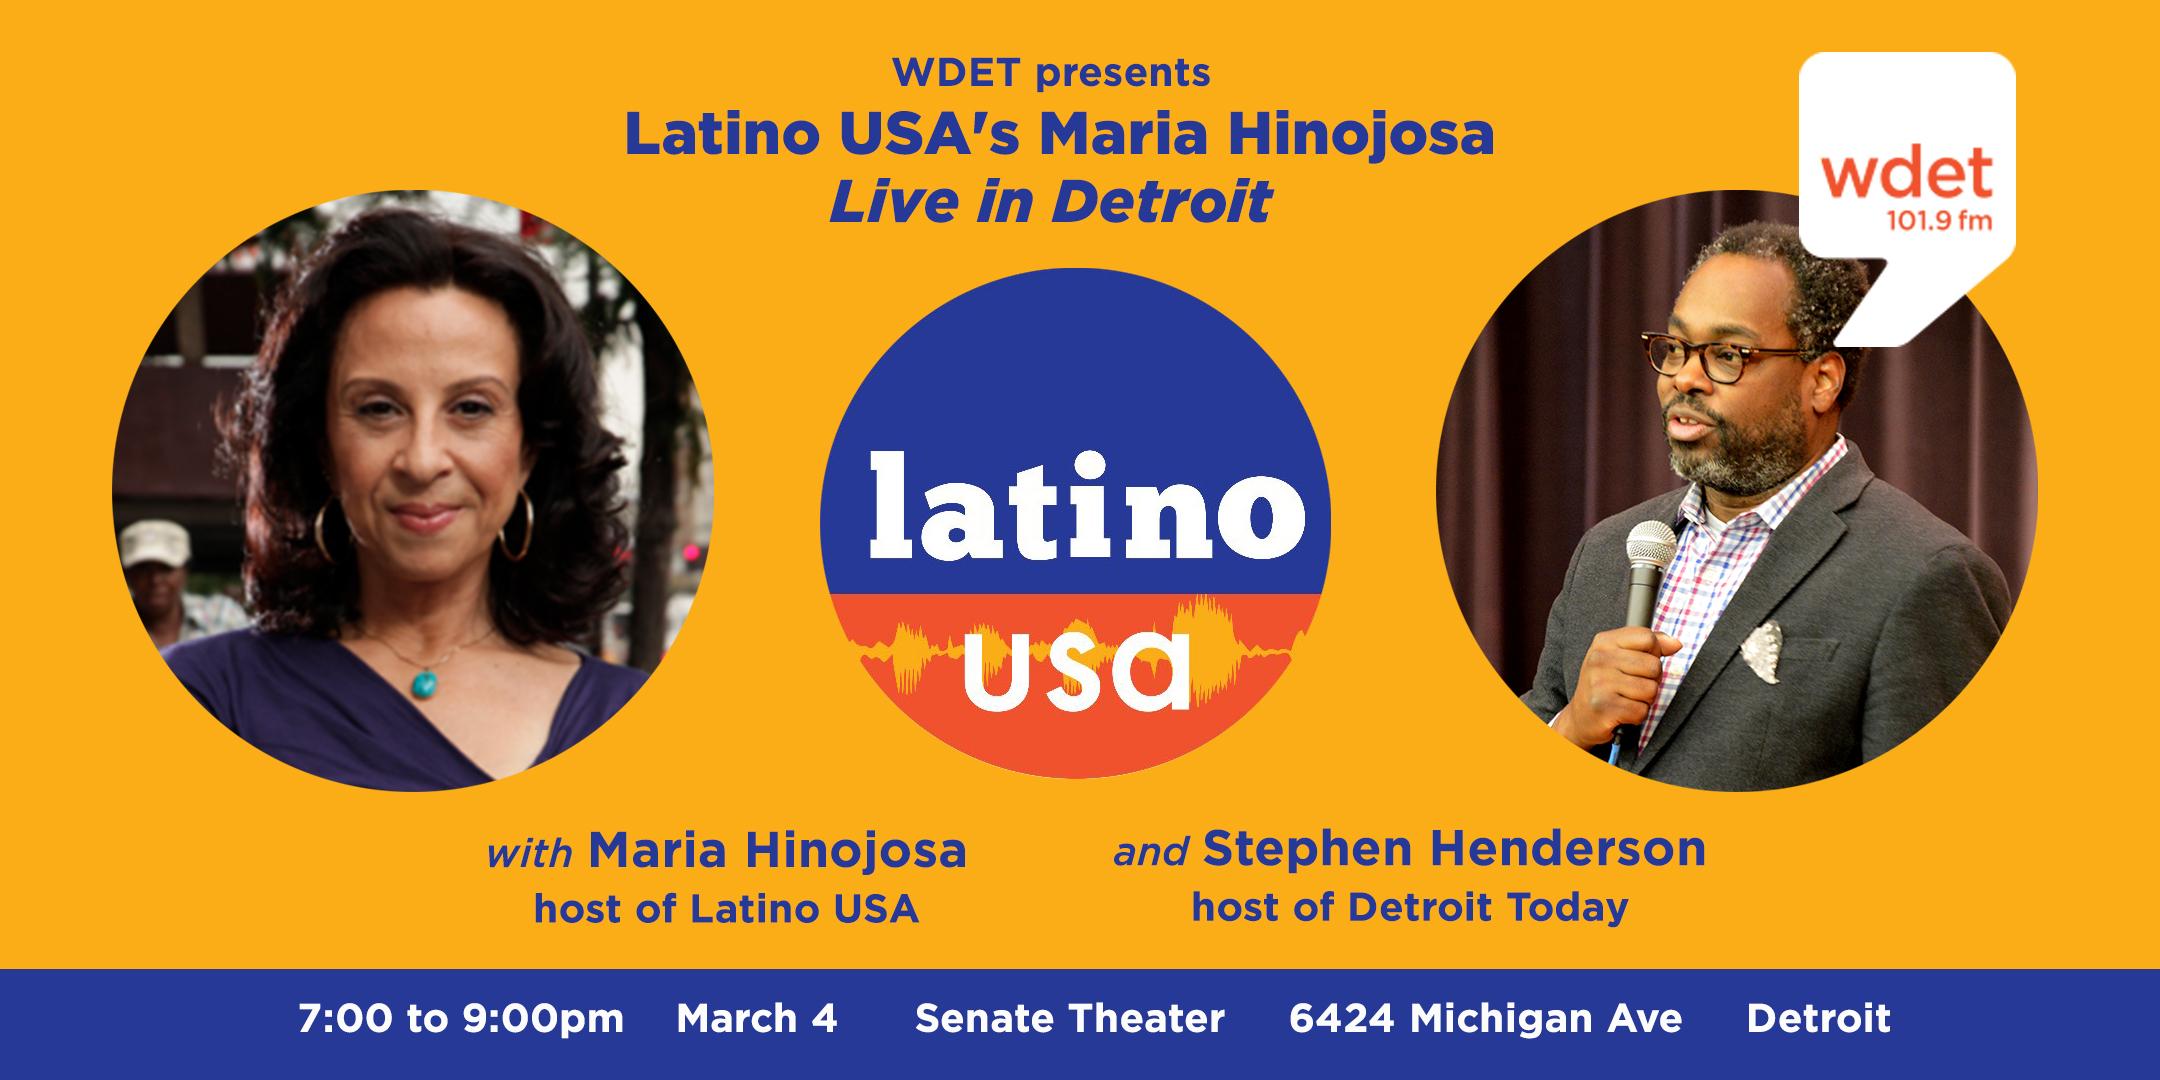 WDET presents Latino USA's Maria Hinojosa, Live in Detroit